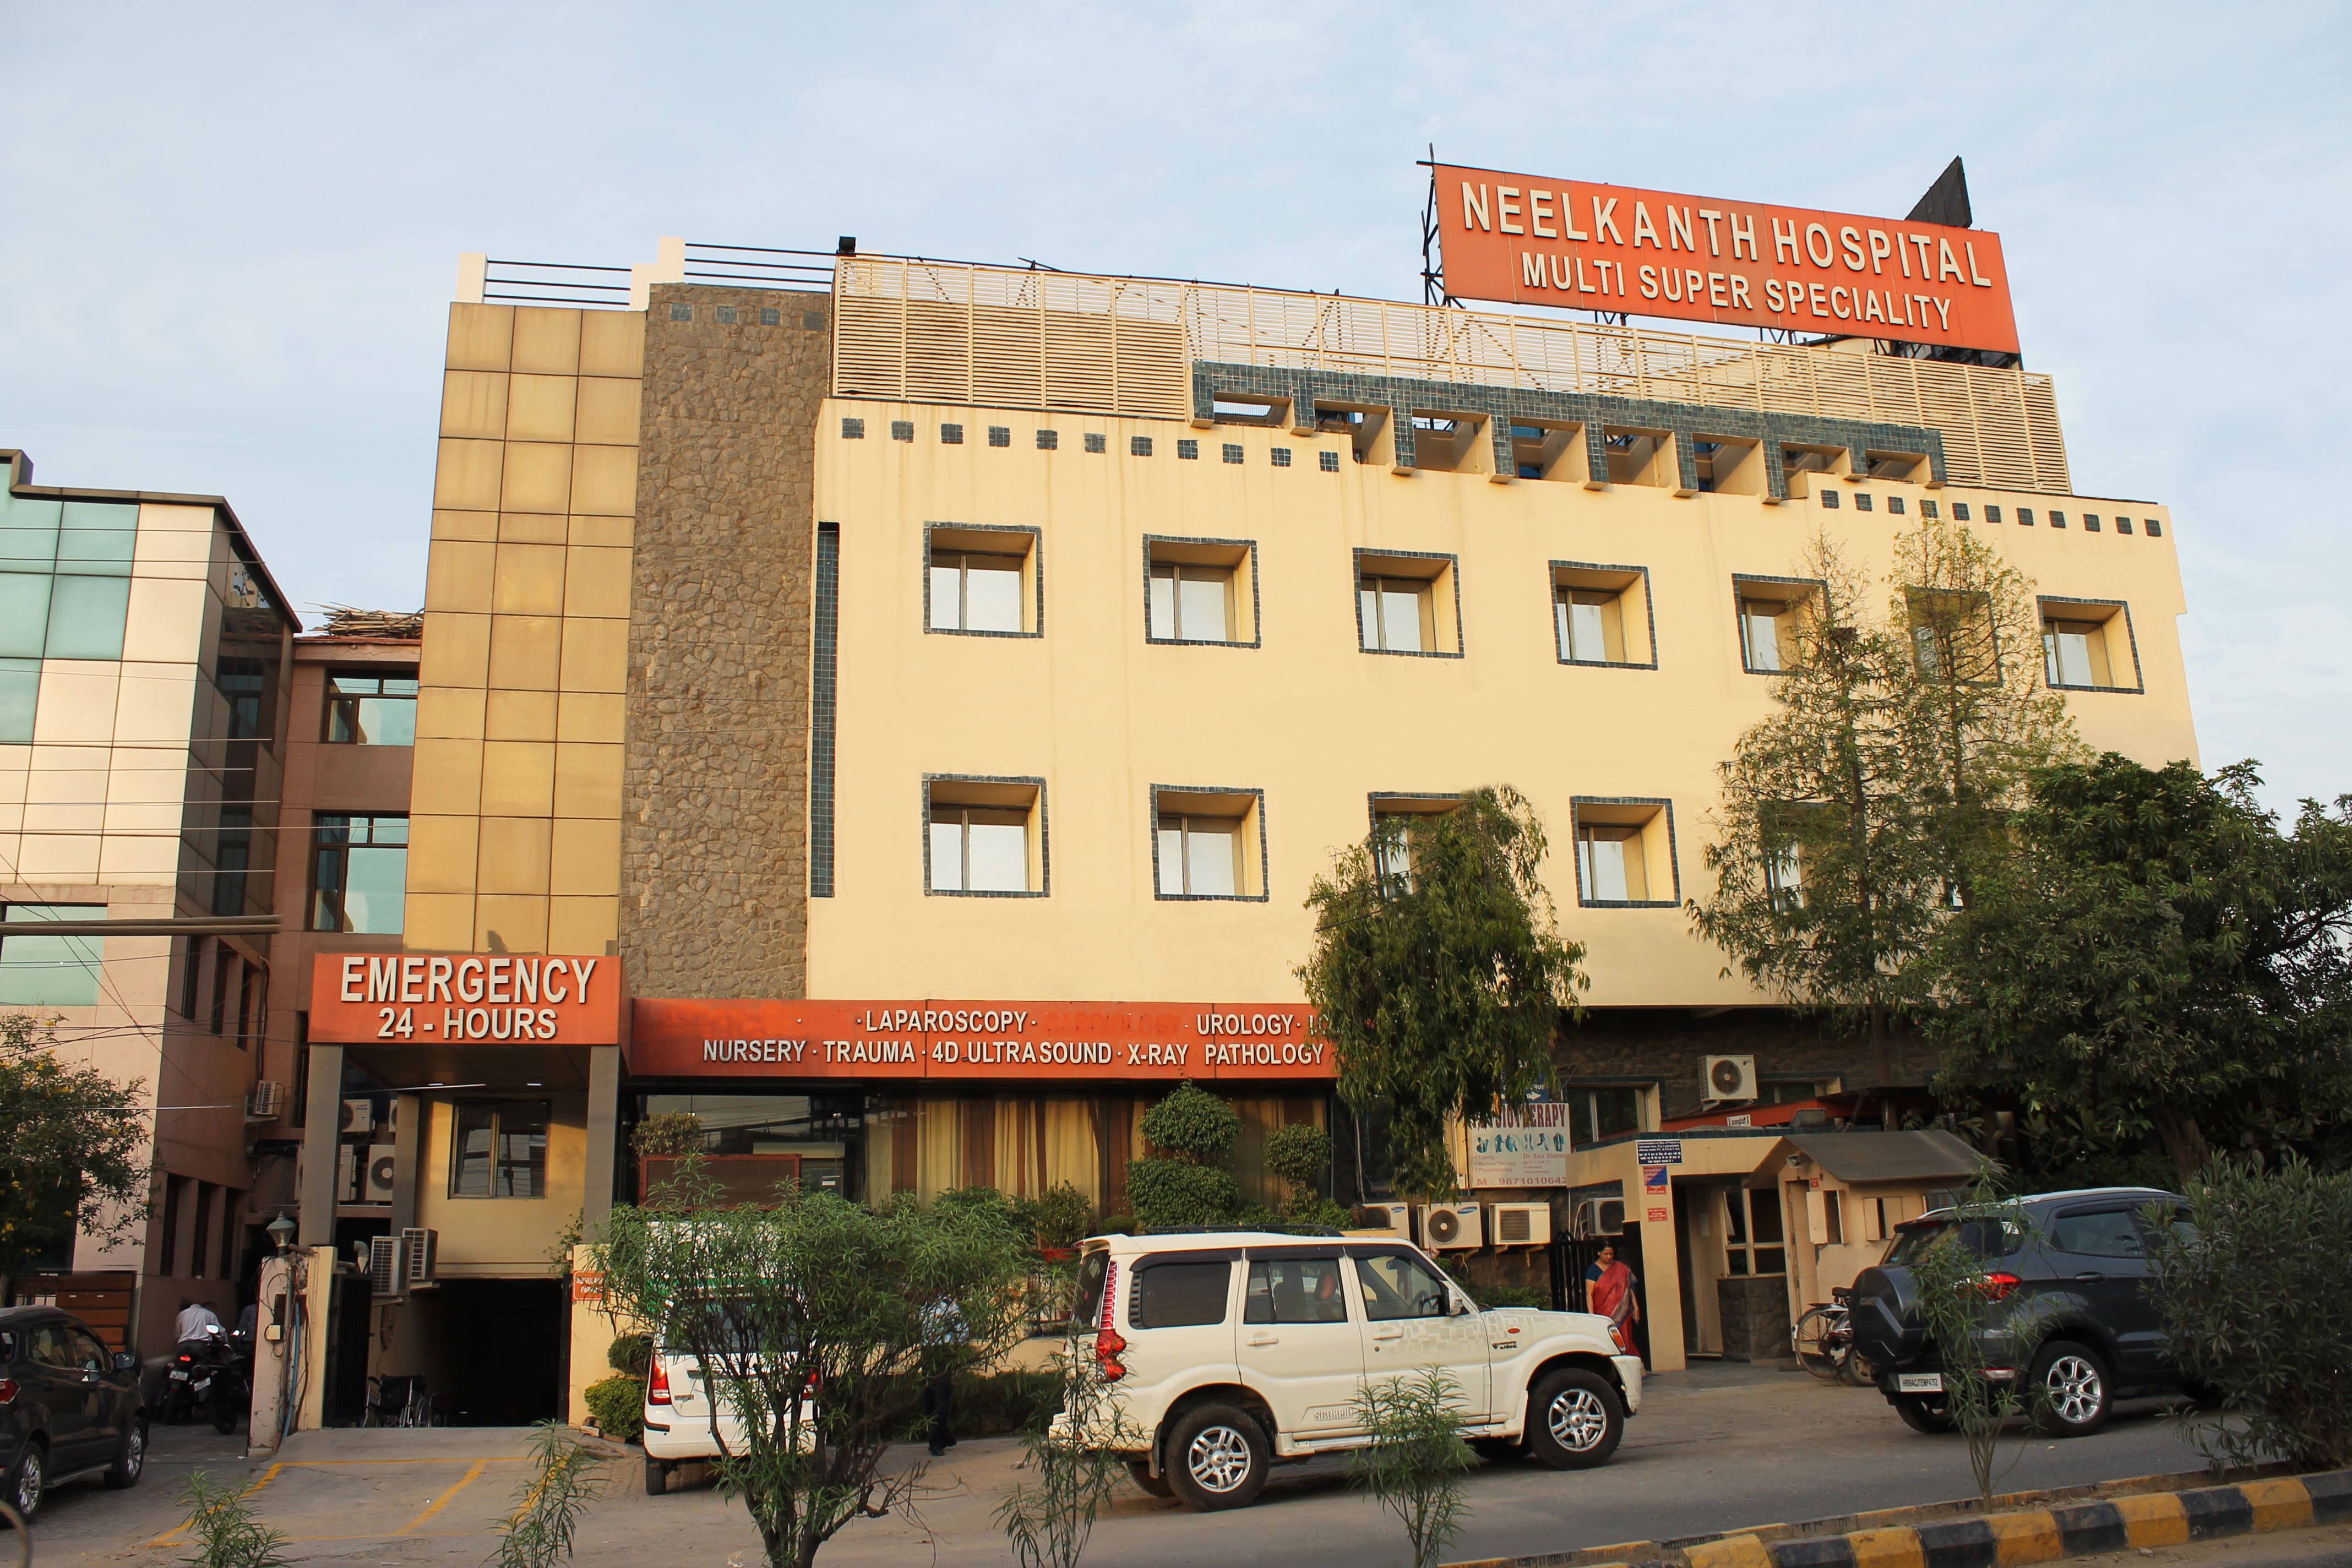 Neelkanth Hospitals multi super specility